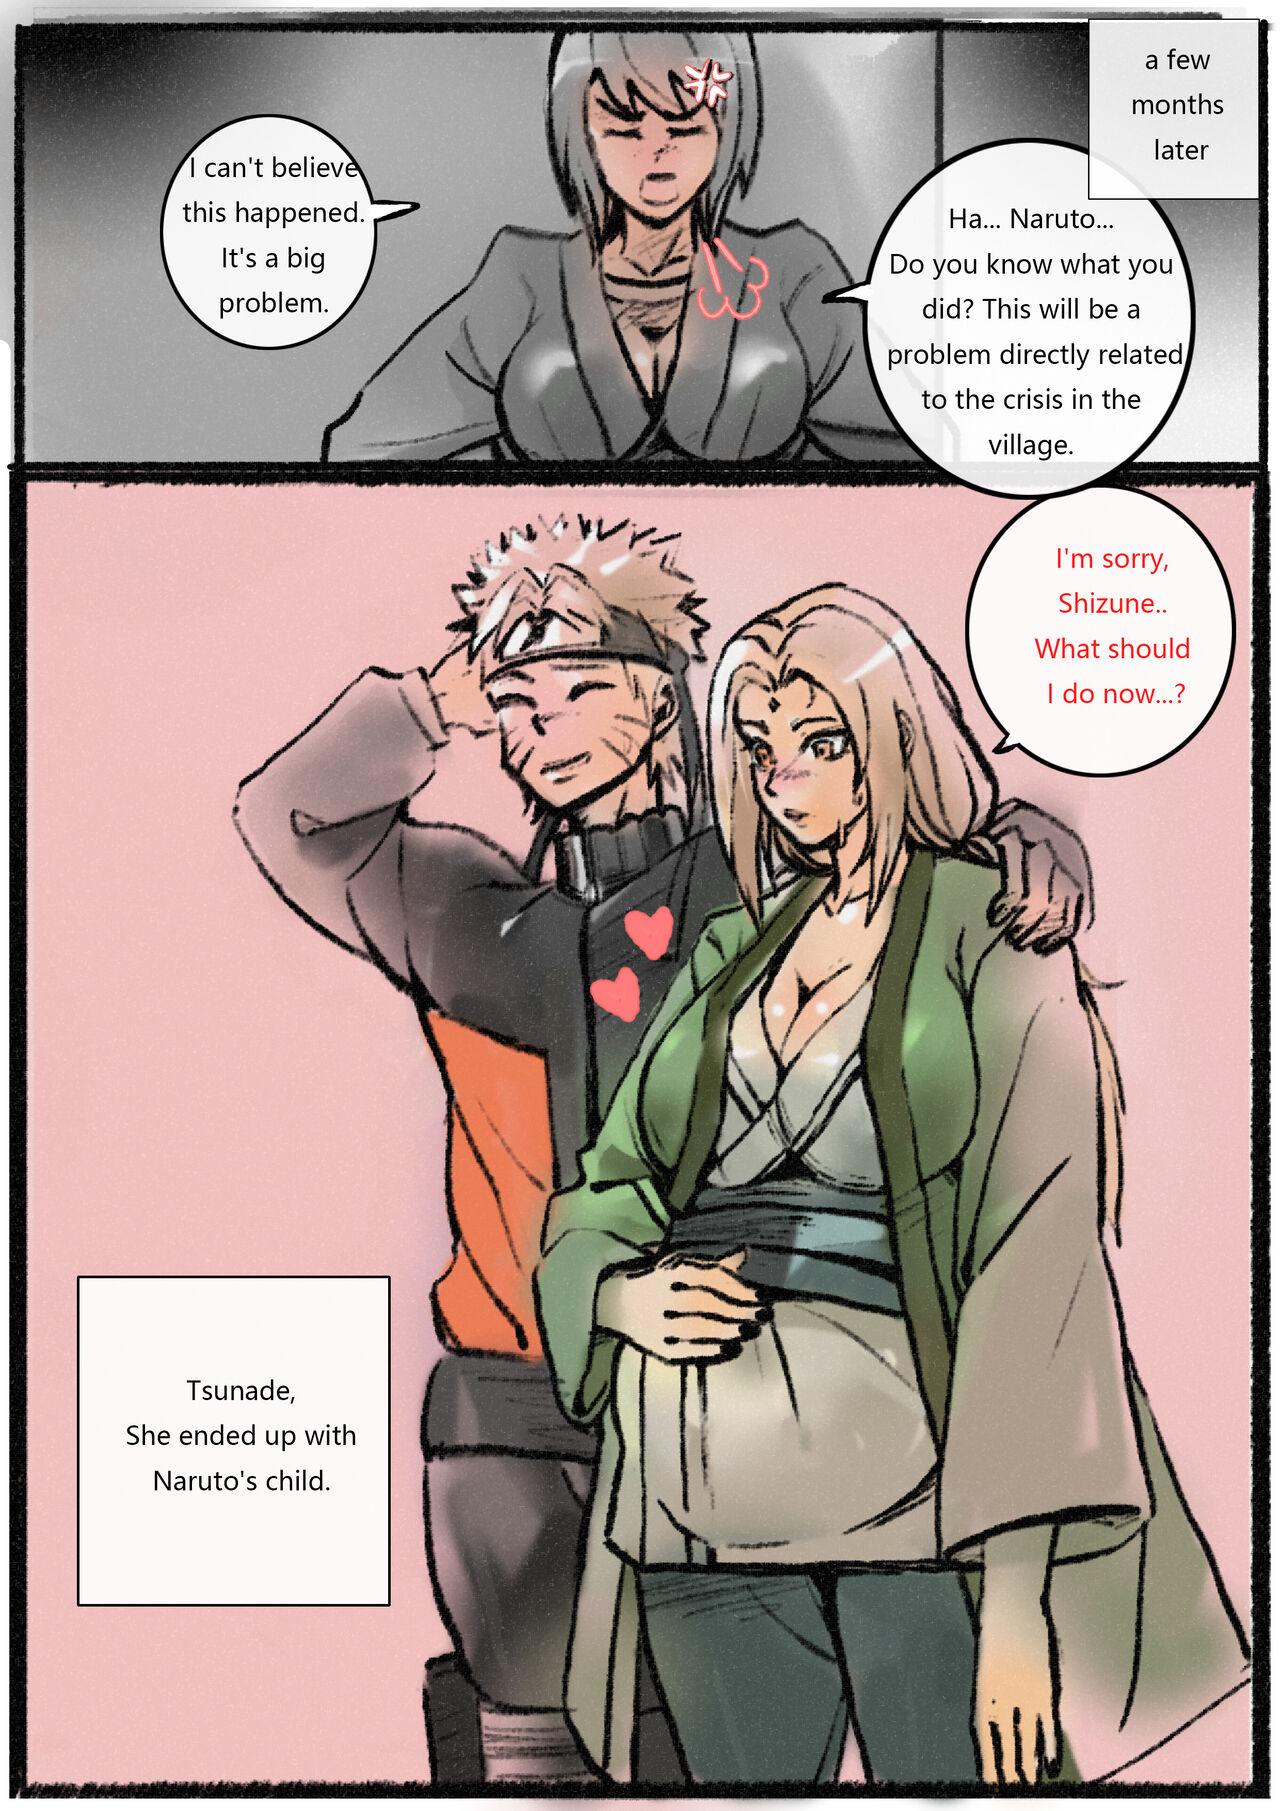 Naruto Wants Tsunade to Help Him Graduate From His Virginity 14